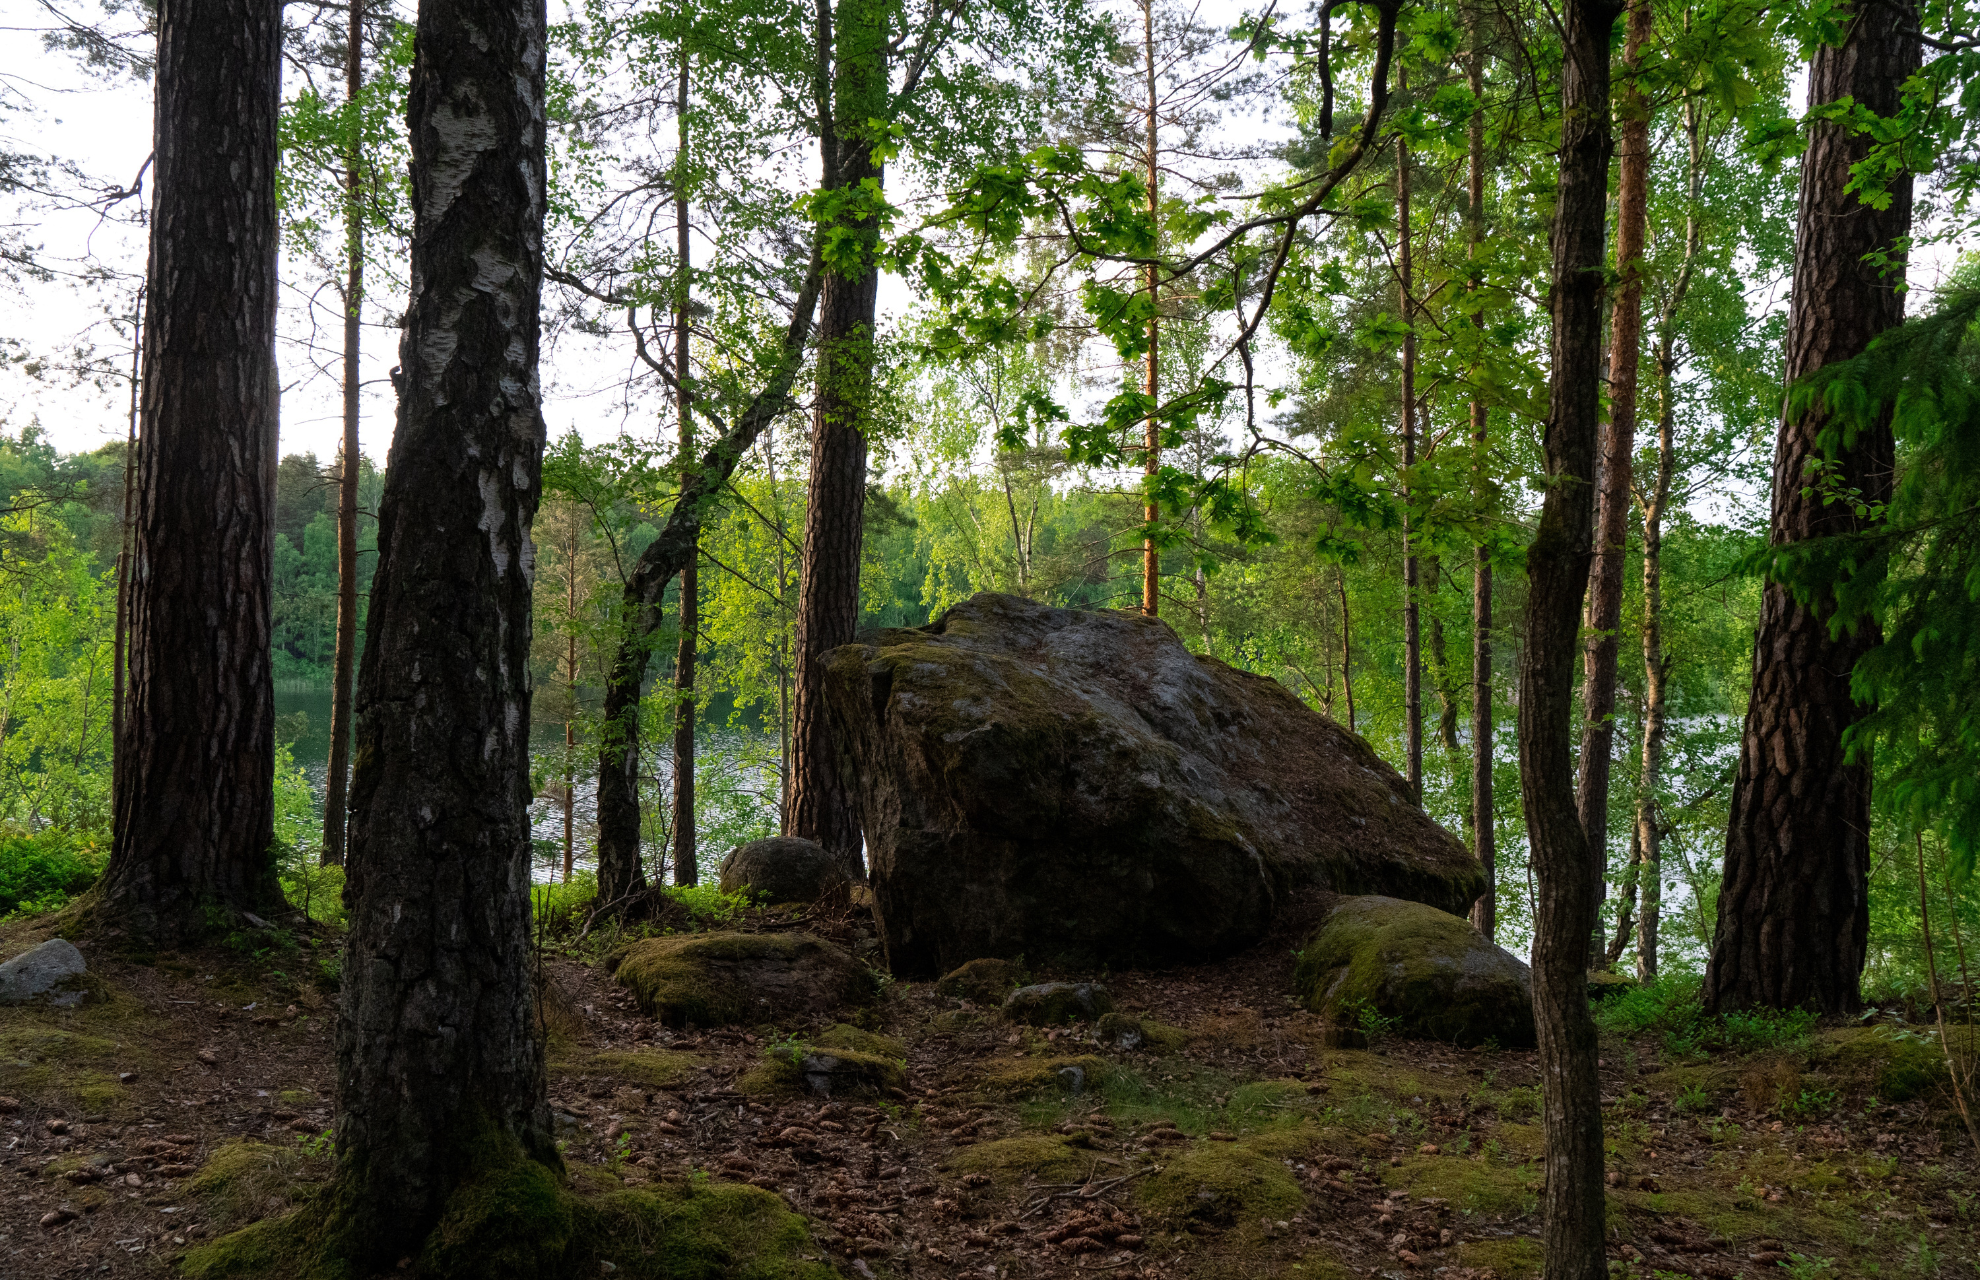 Hyra container Nacka - Bild på skog i Nacka